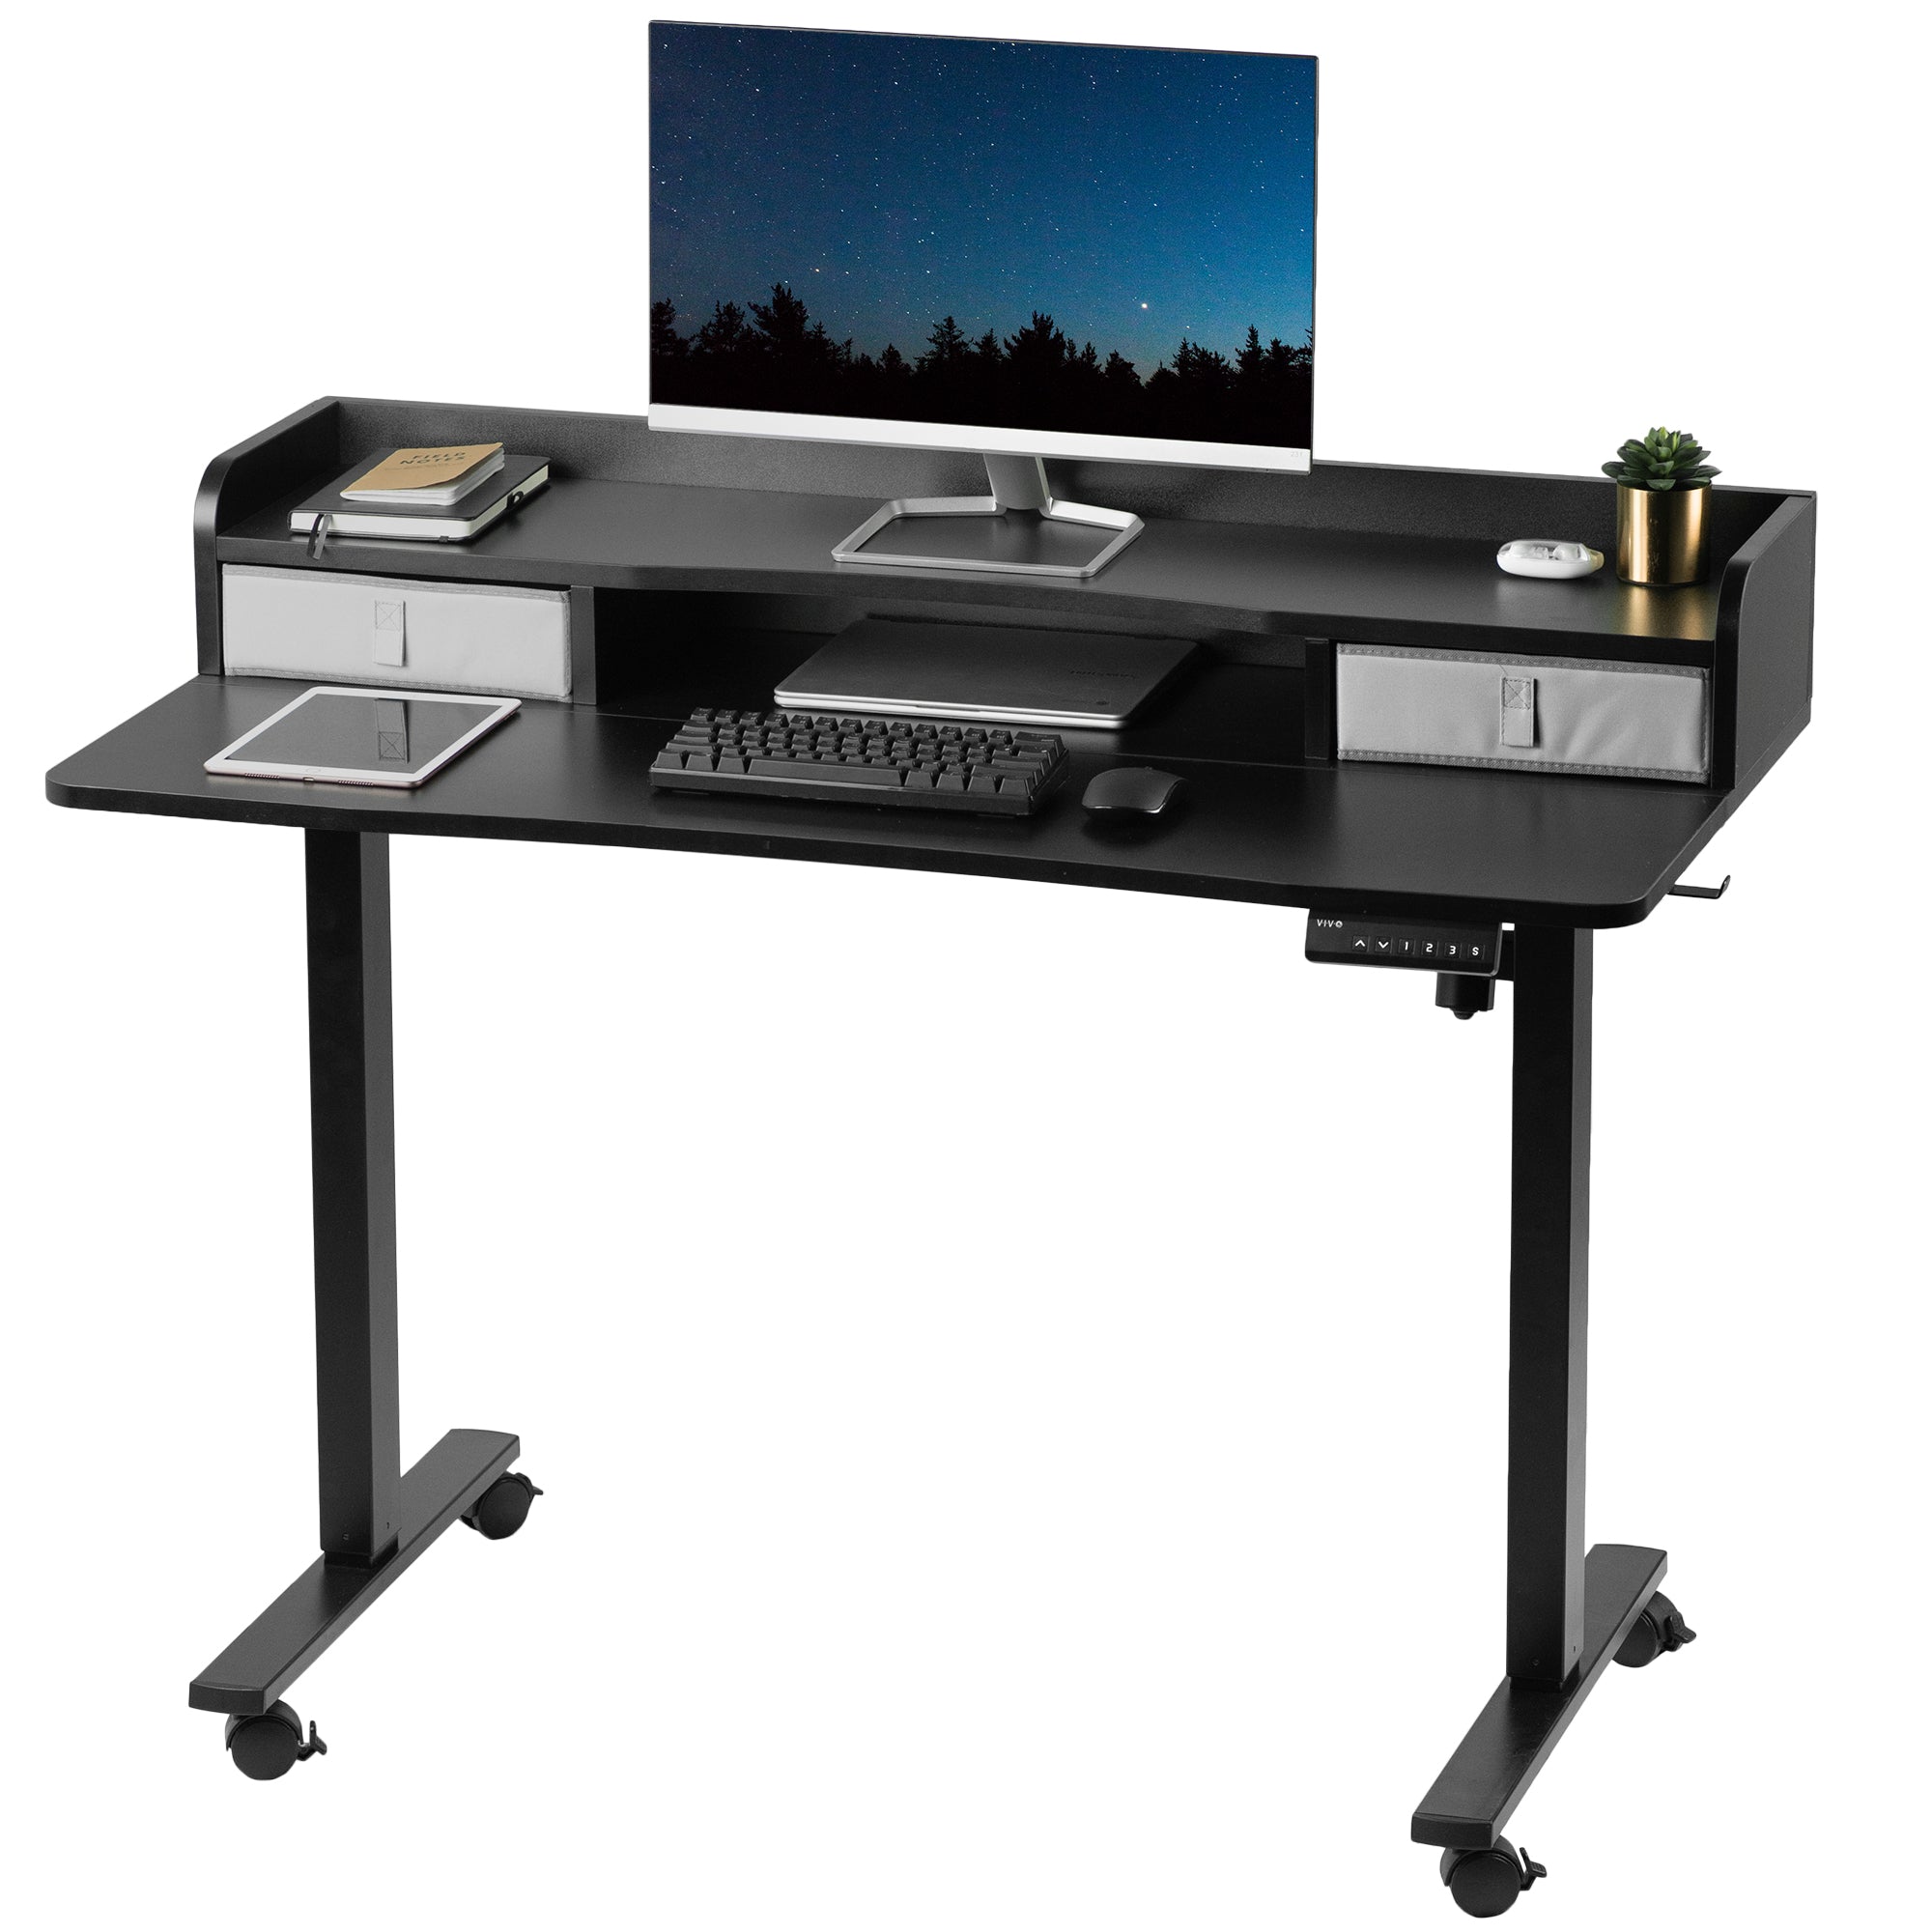 MOUNT-IT! 48 in. Black Extra-Wide Height Adjustable Standing Desk